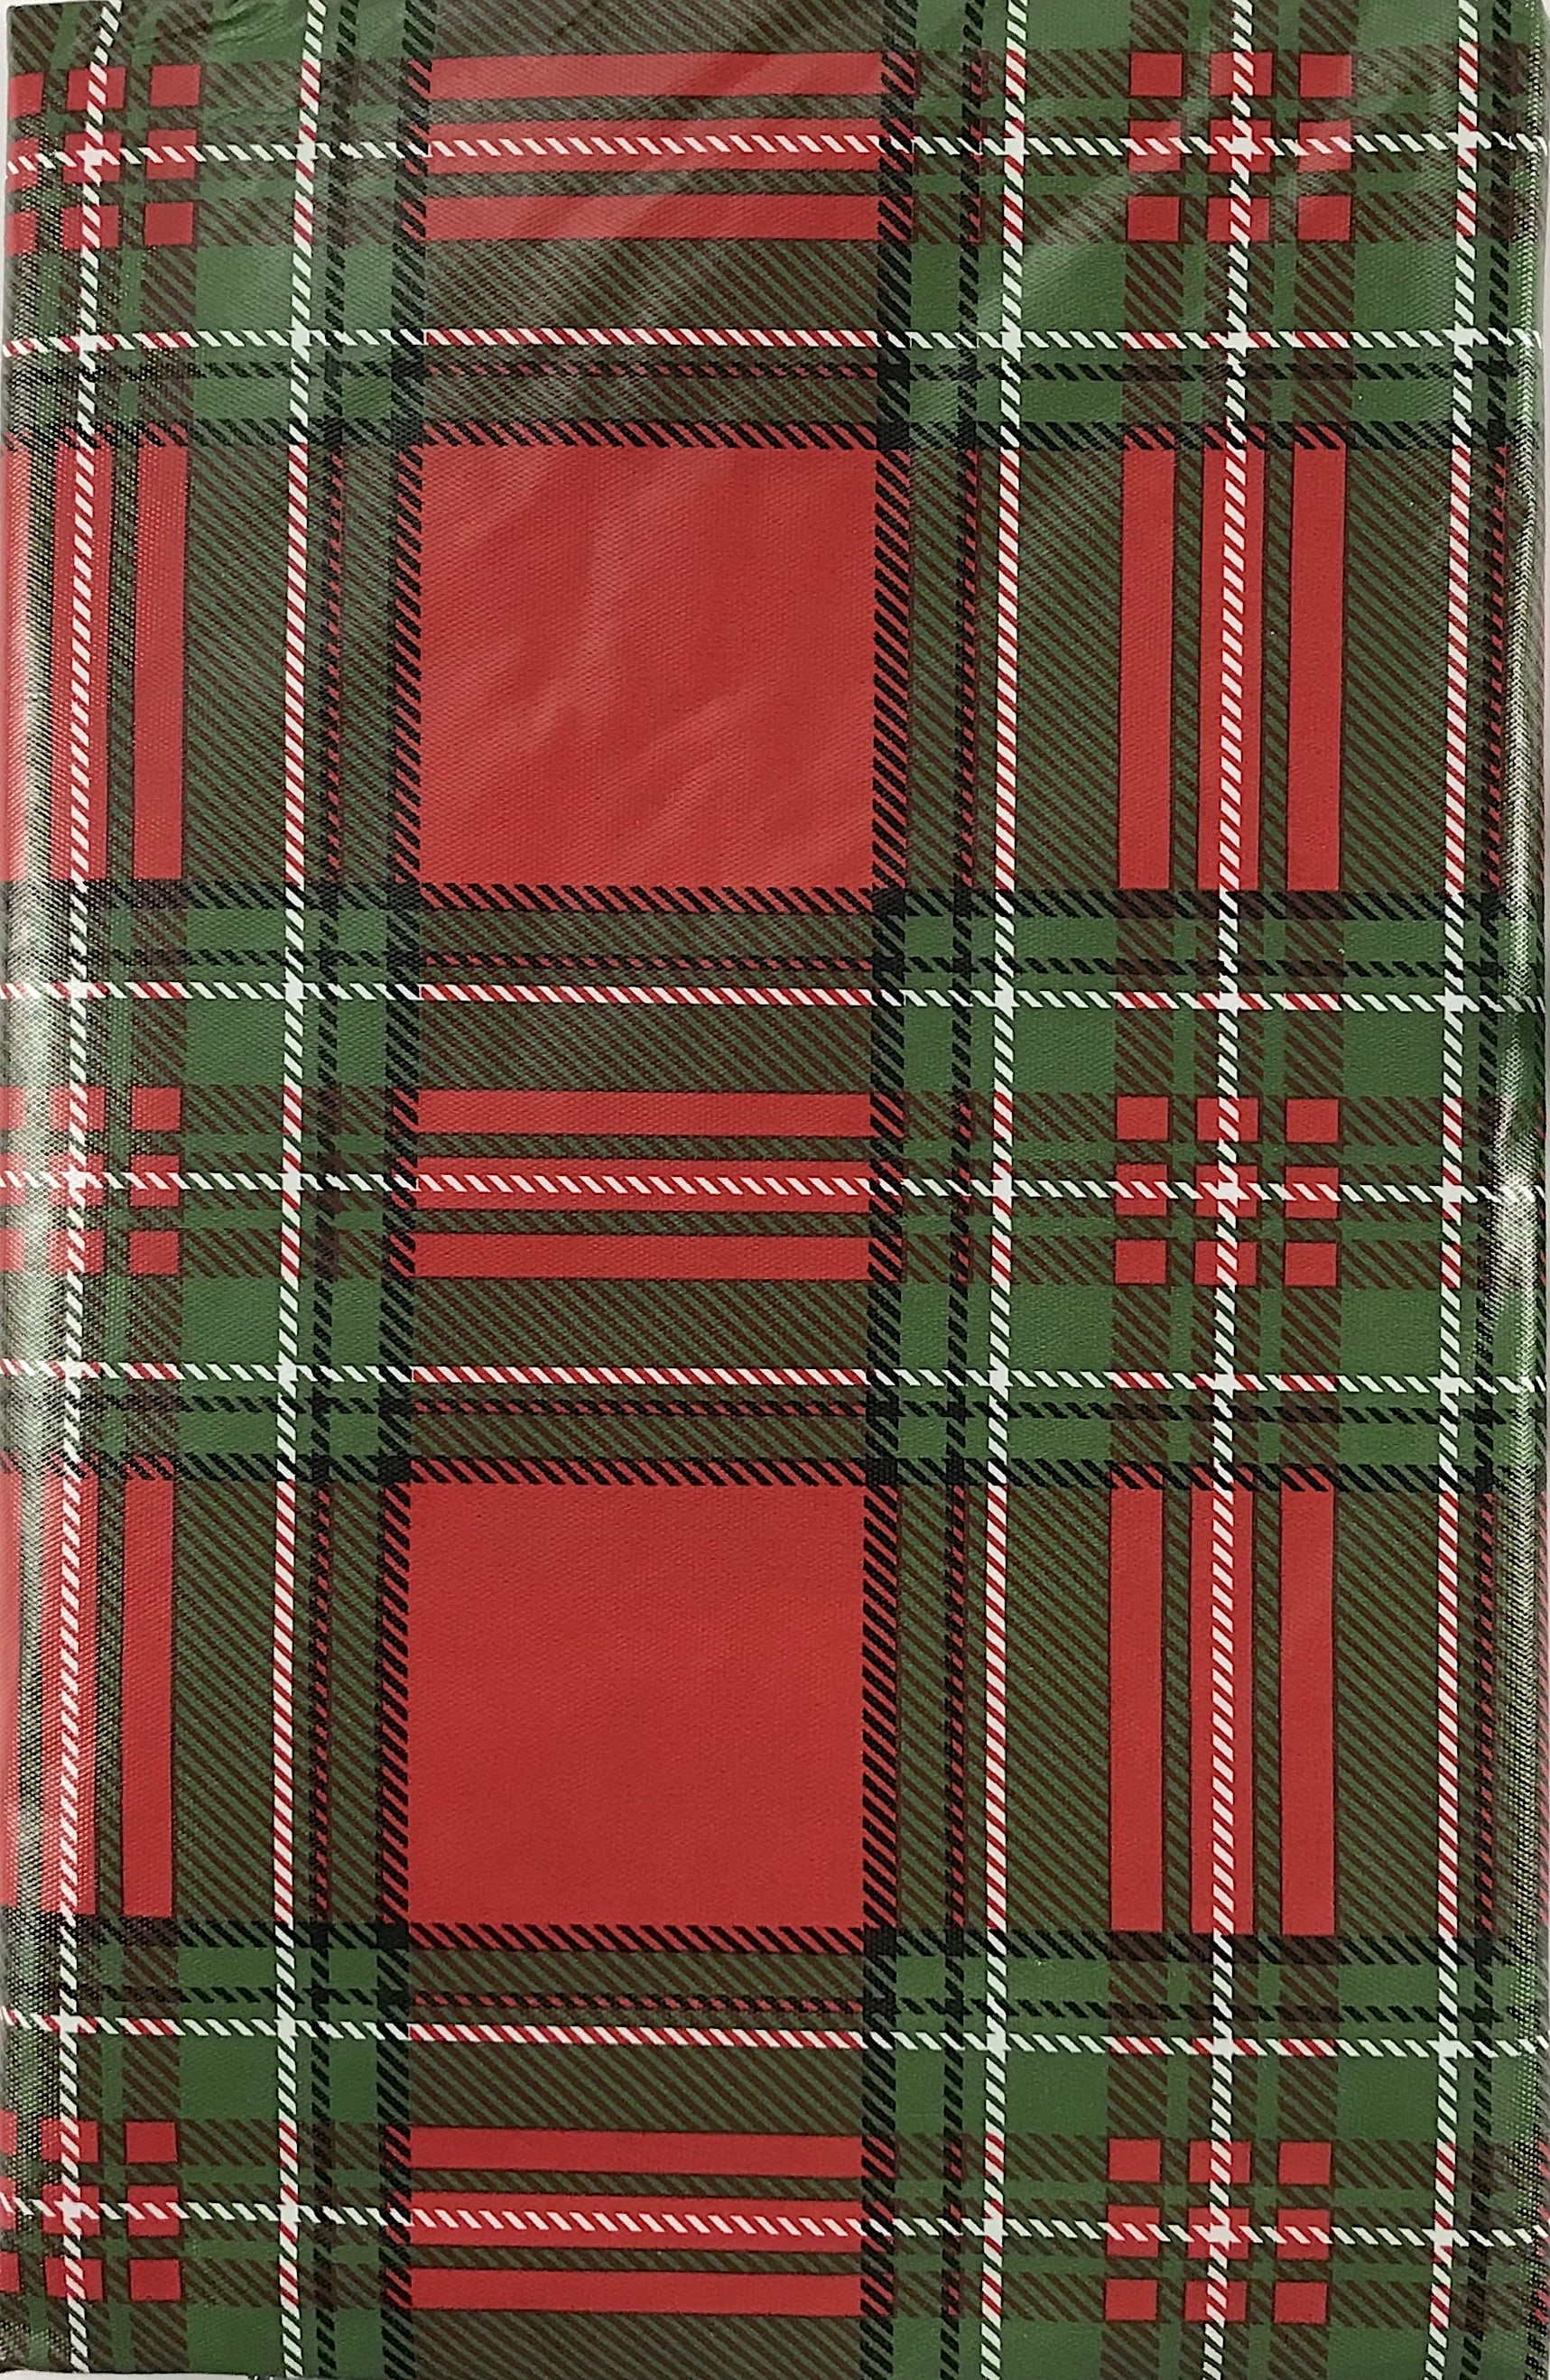 gift idea for mom dad grandma grandpa customize for ANY Clan MacGregor Scottish Clan Tartan Vanilla Scented Candle